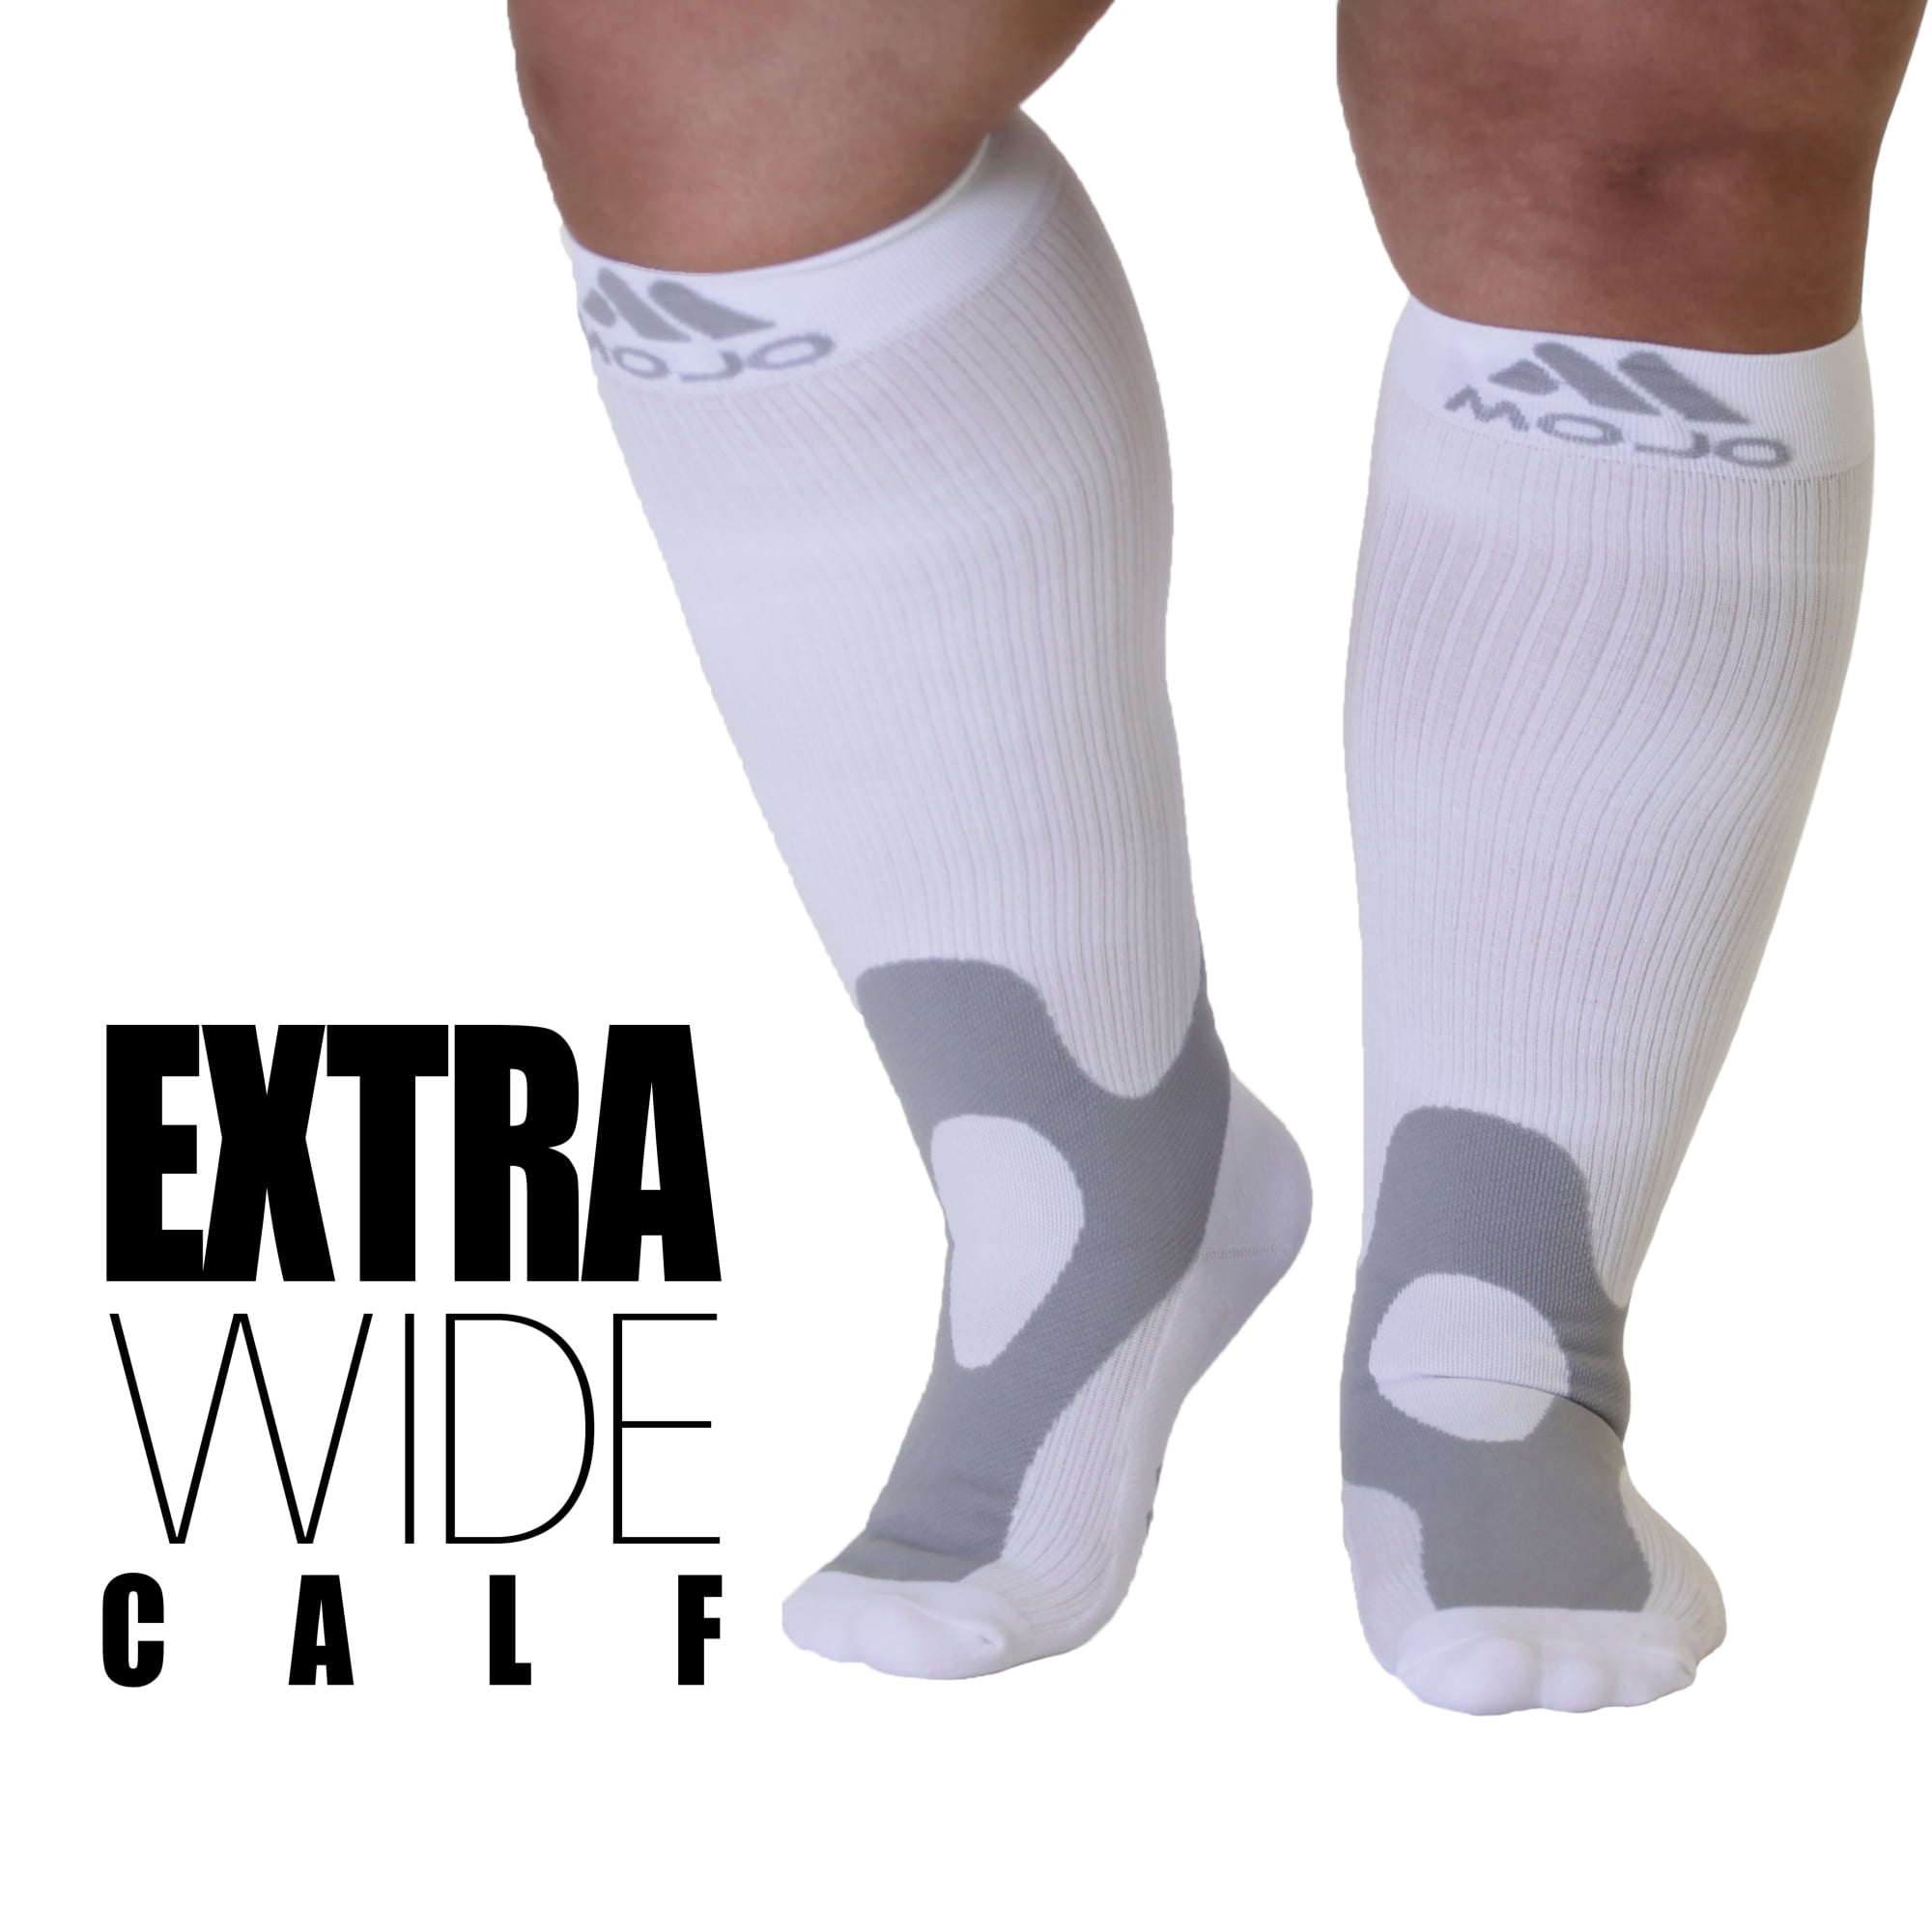 Mojo Coolmax Recovery & Performance Sports Compression Socks Unisex Triathlete Compression Socks